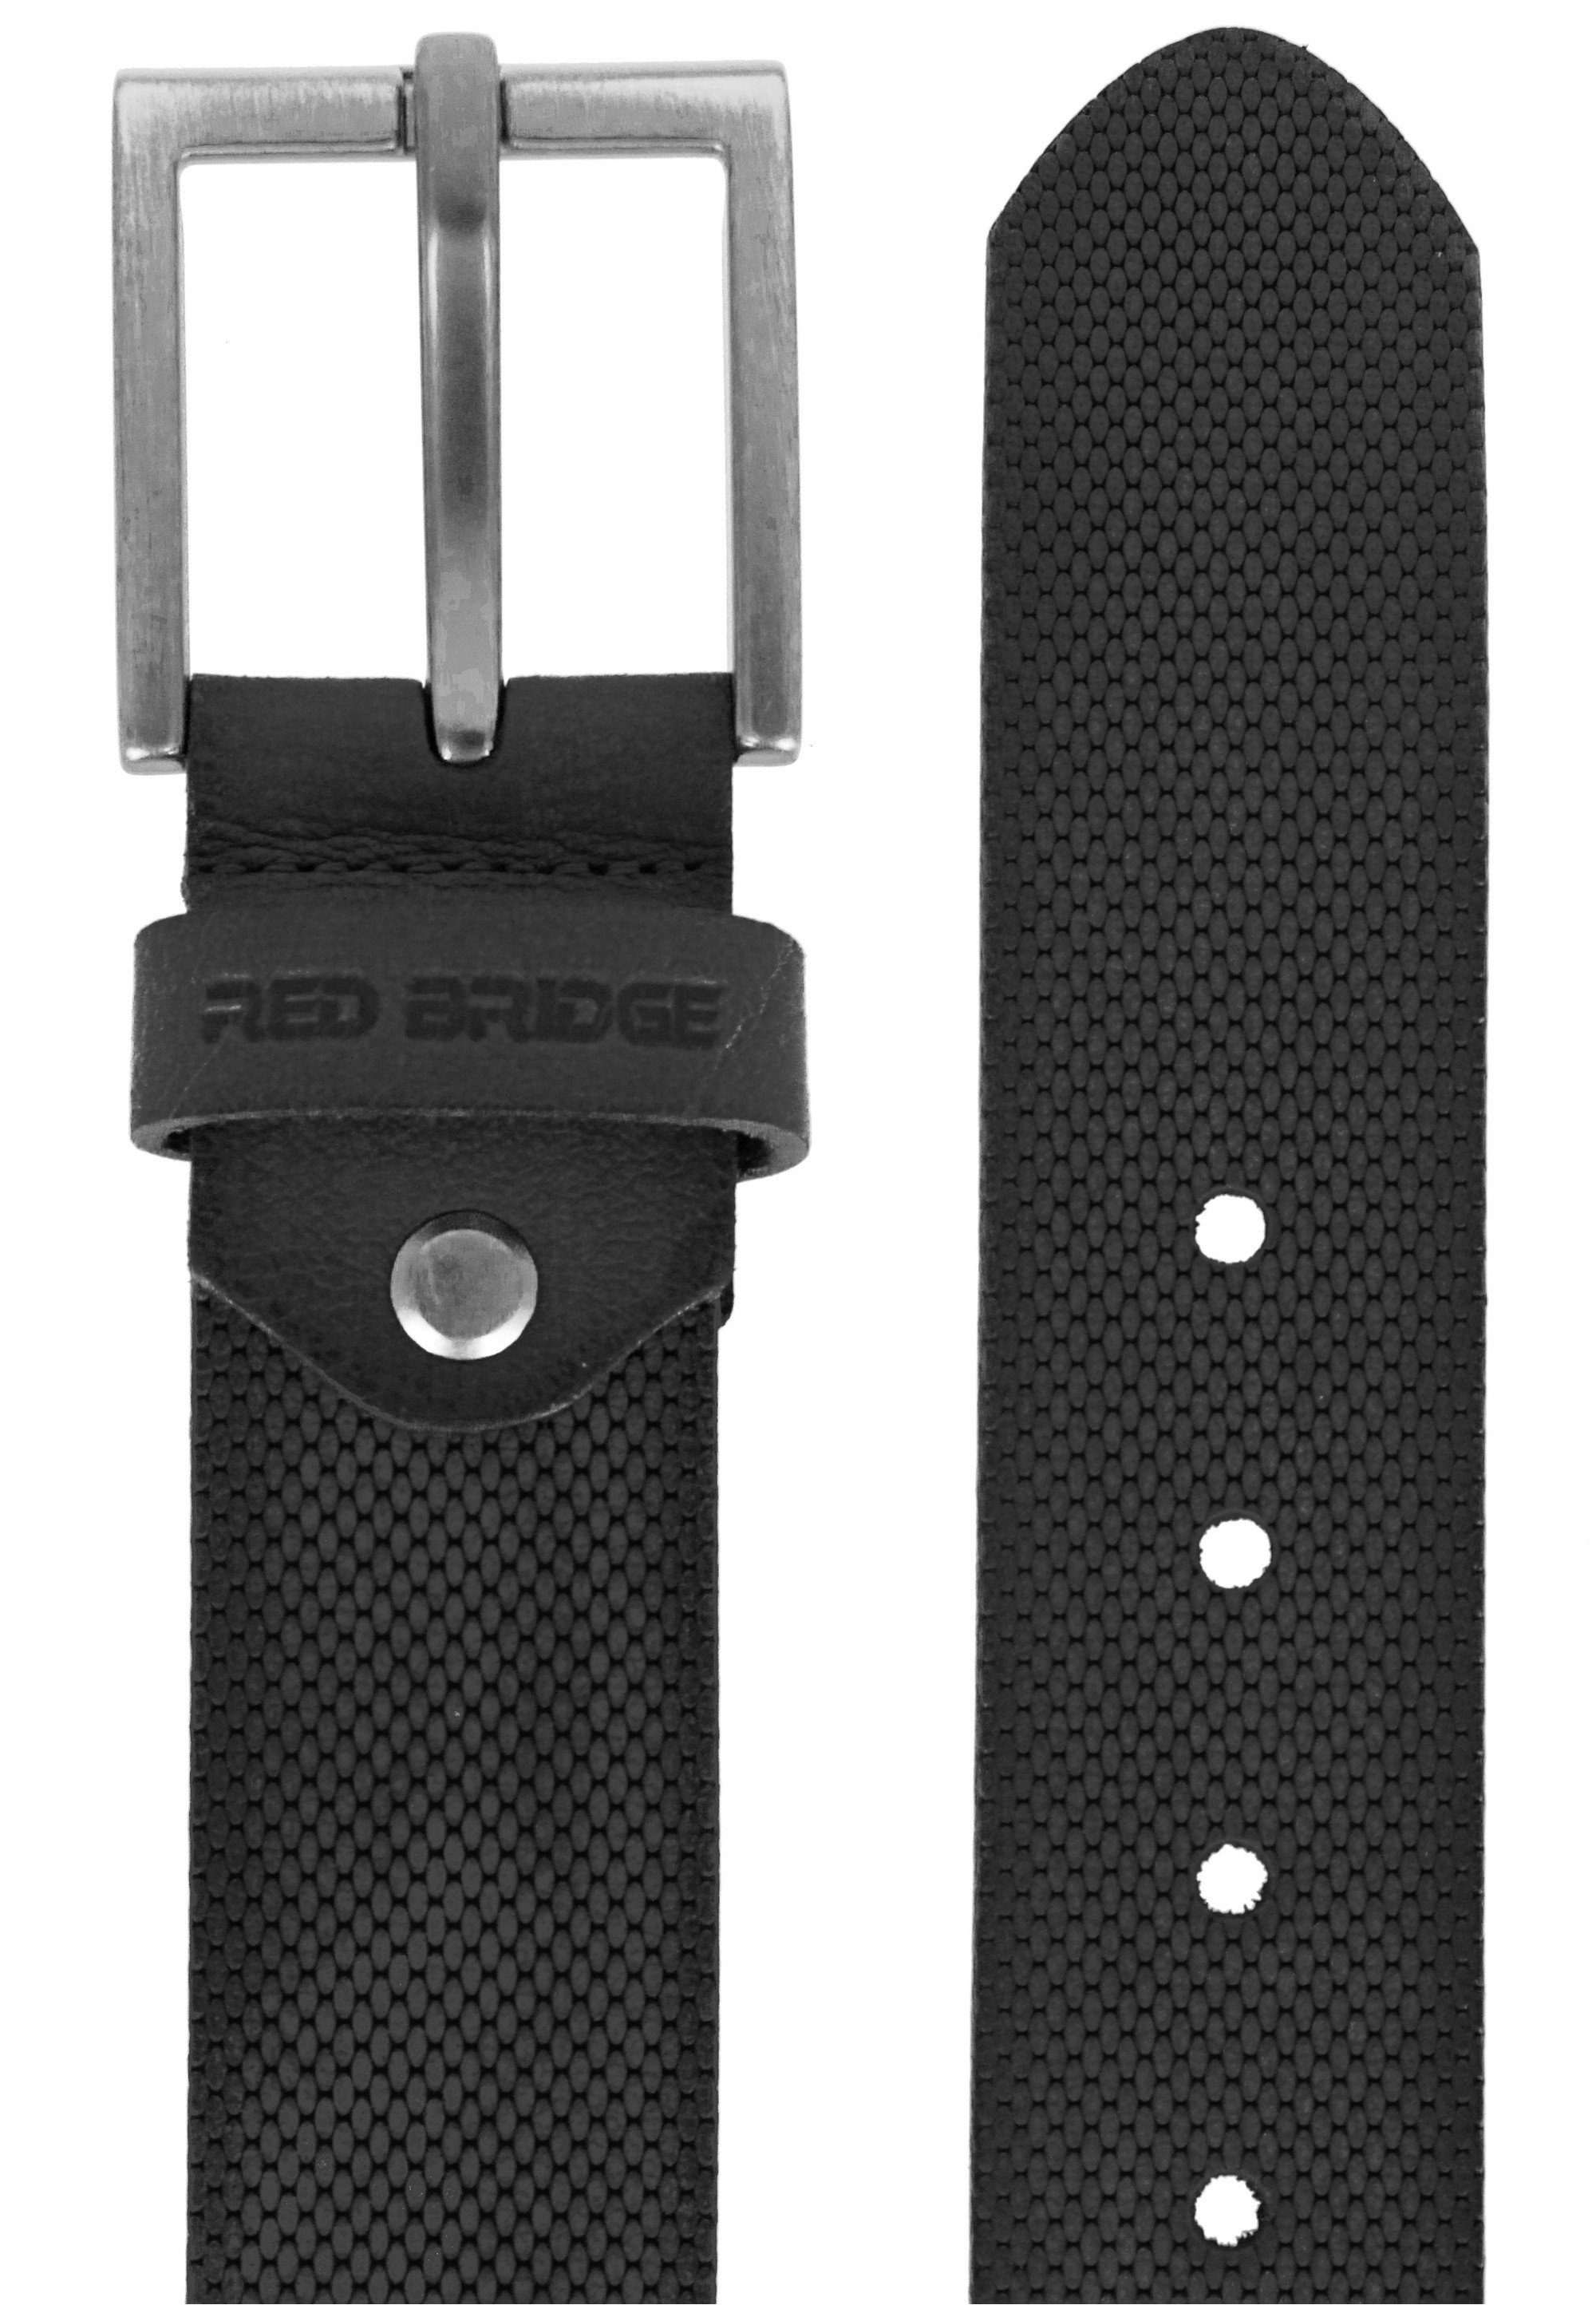 RedBridge Ledergürtel Frisco schlichtem Design in schwarz